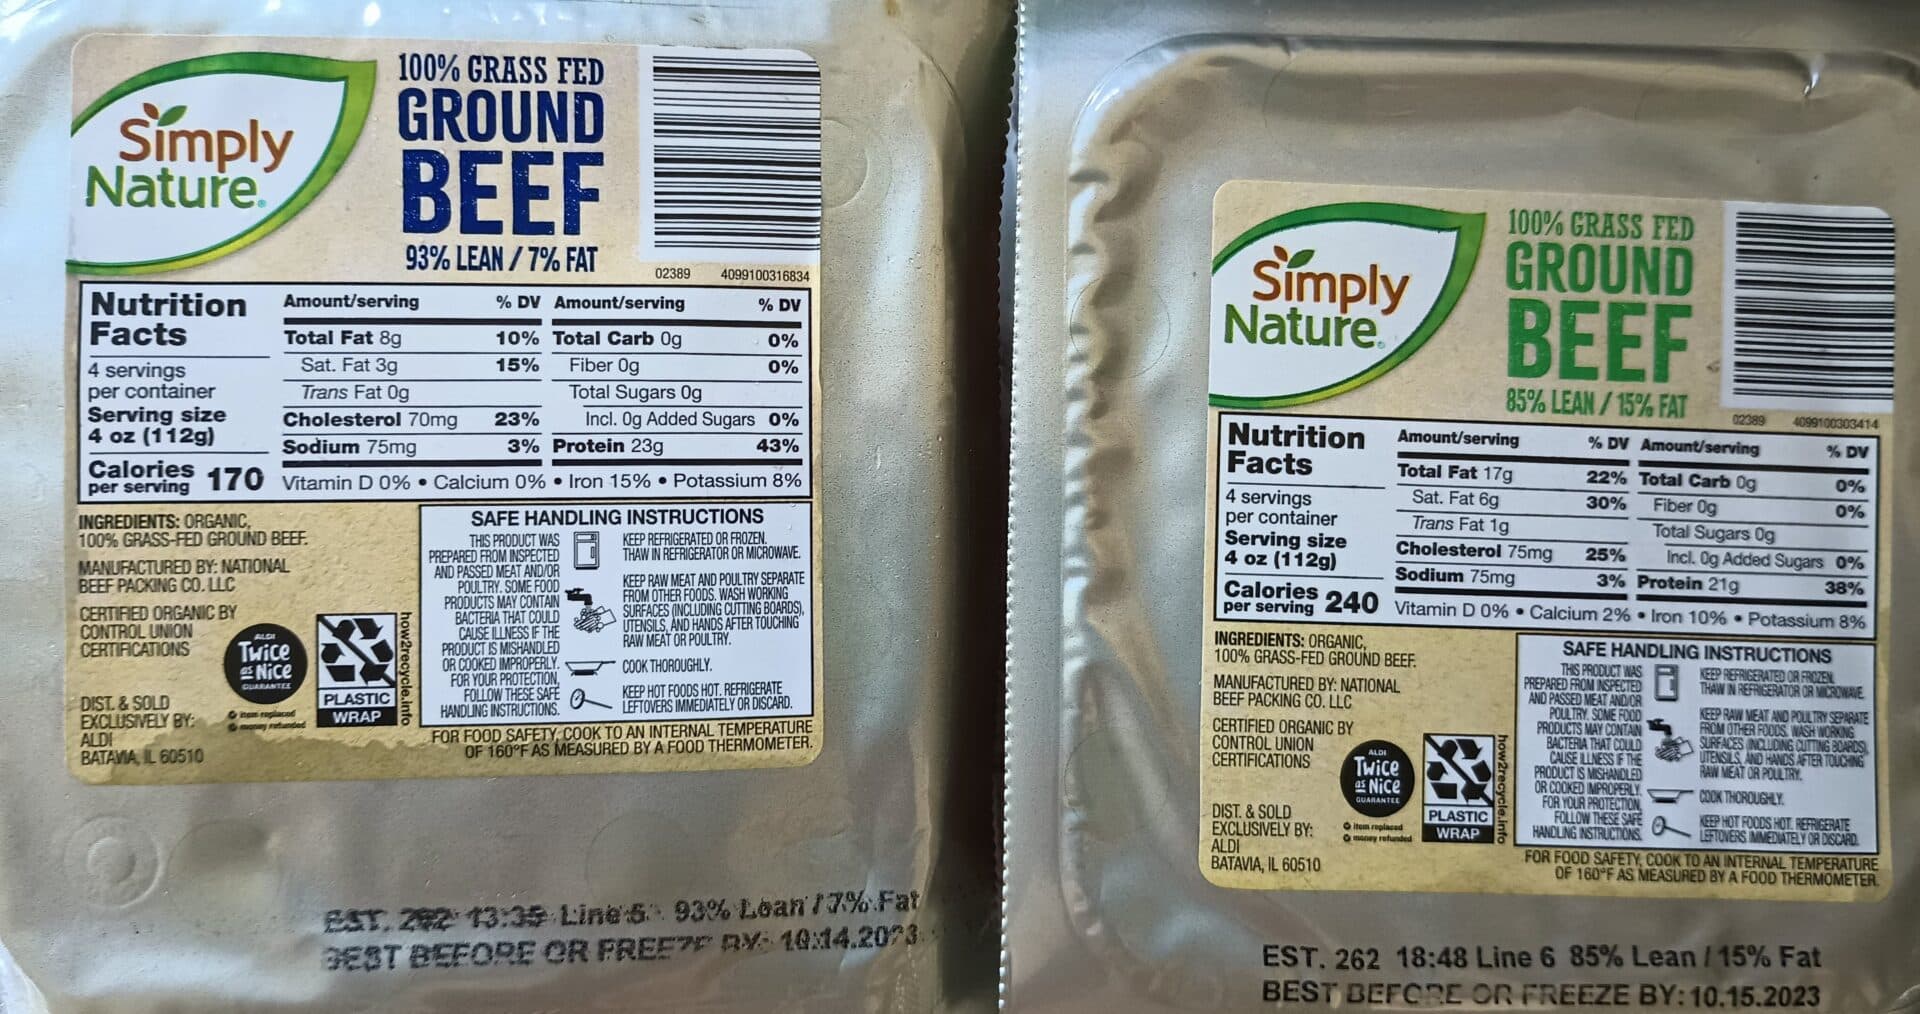 Marketside Organic Grass-Fed Ground Beef, 85% Lean/15% Fat, 1 lb 